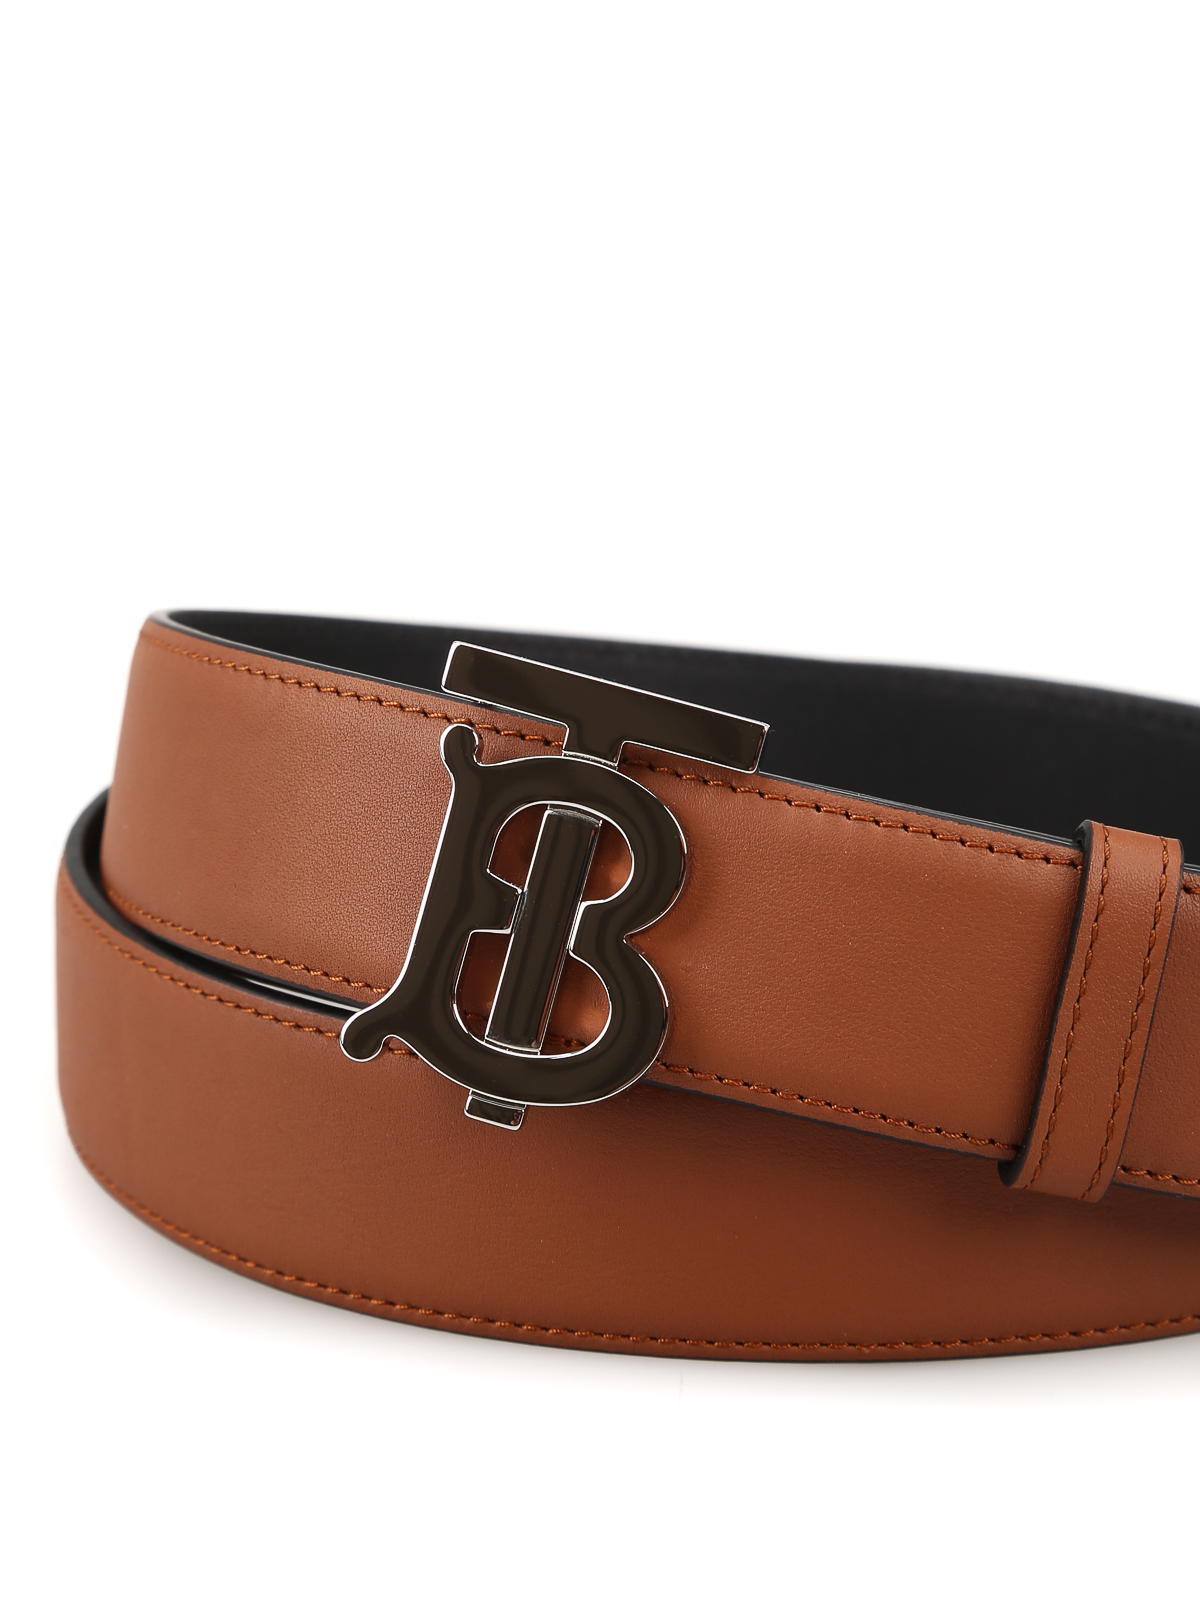 burberry belt online